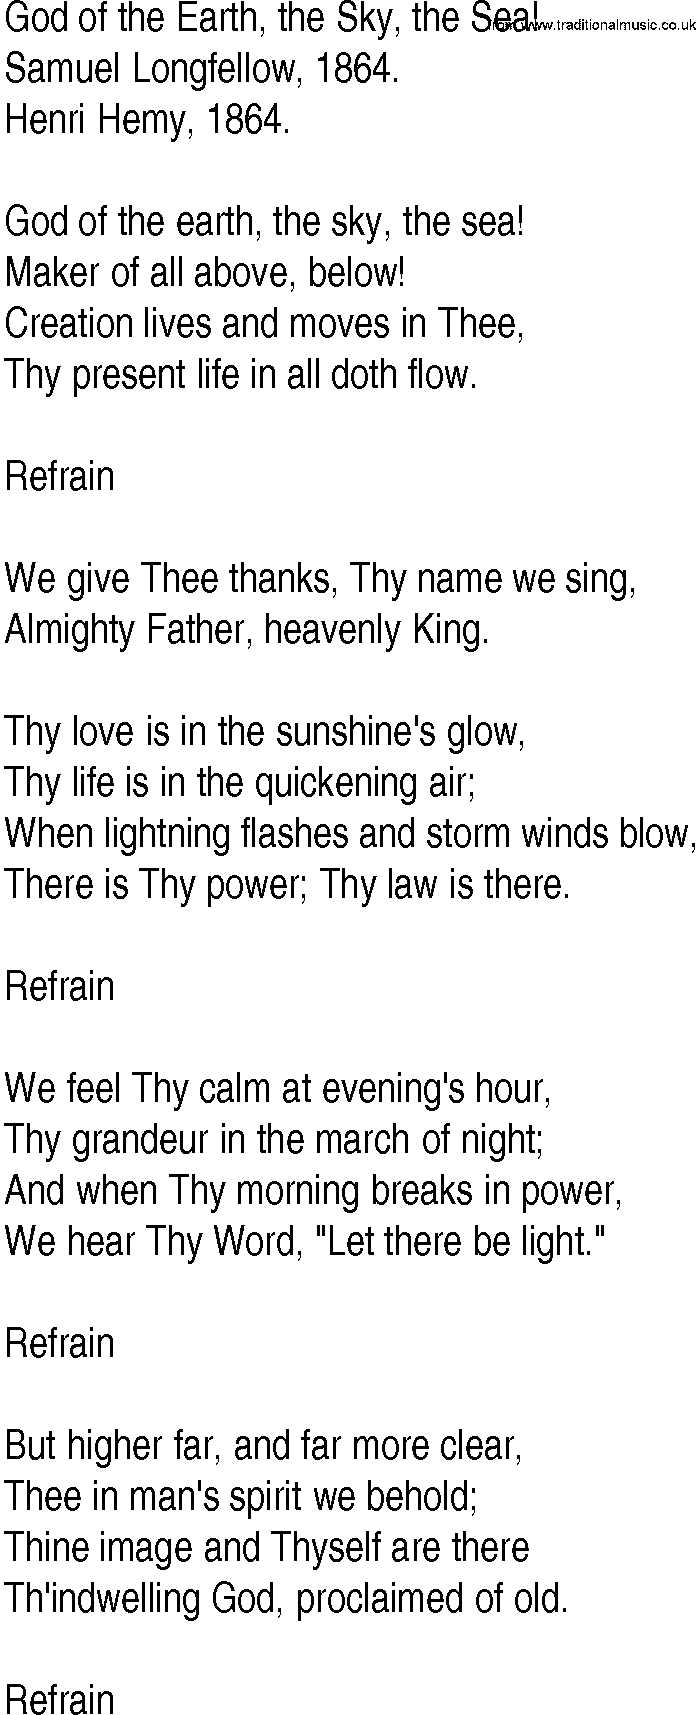 Hymn and Gospel Song: God of the Earth, the Sky, the Sea! by Samuel Longfellow lyrics